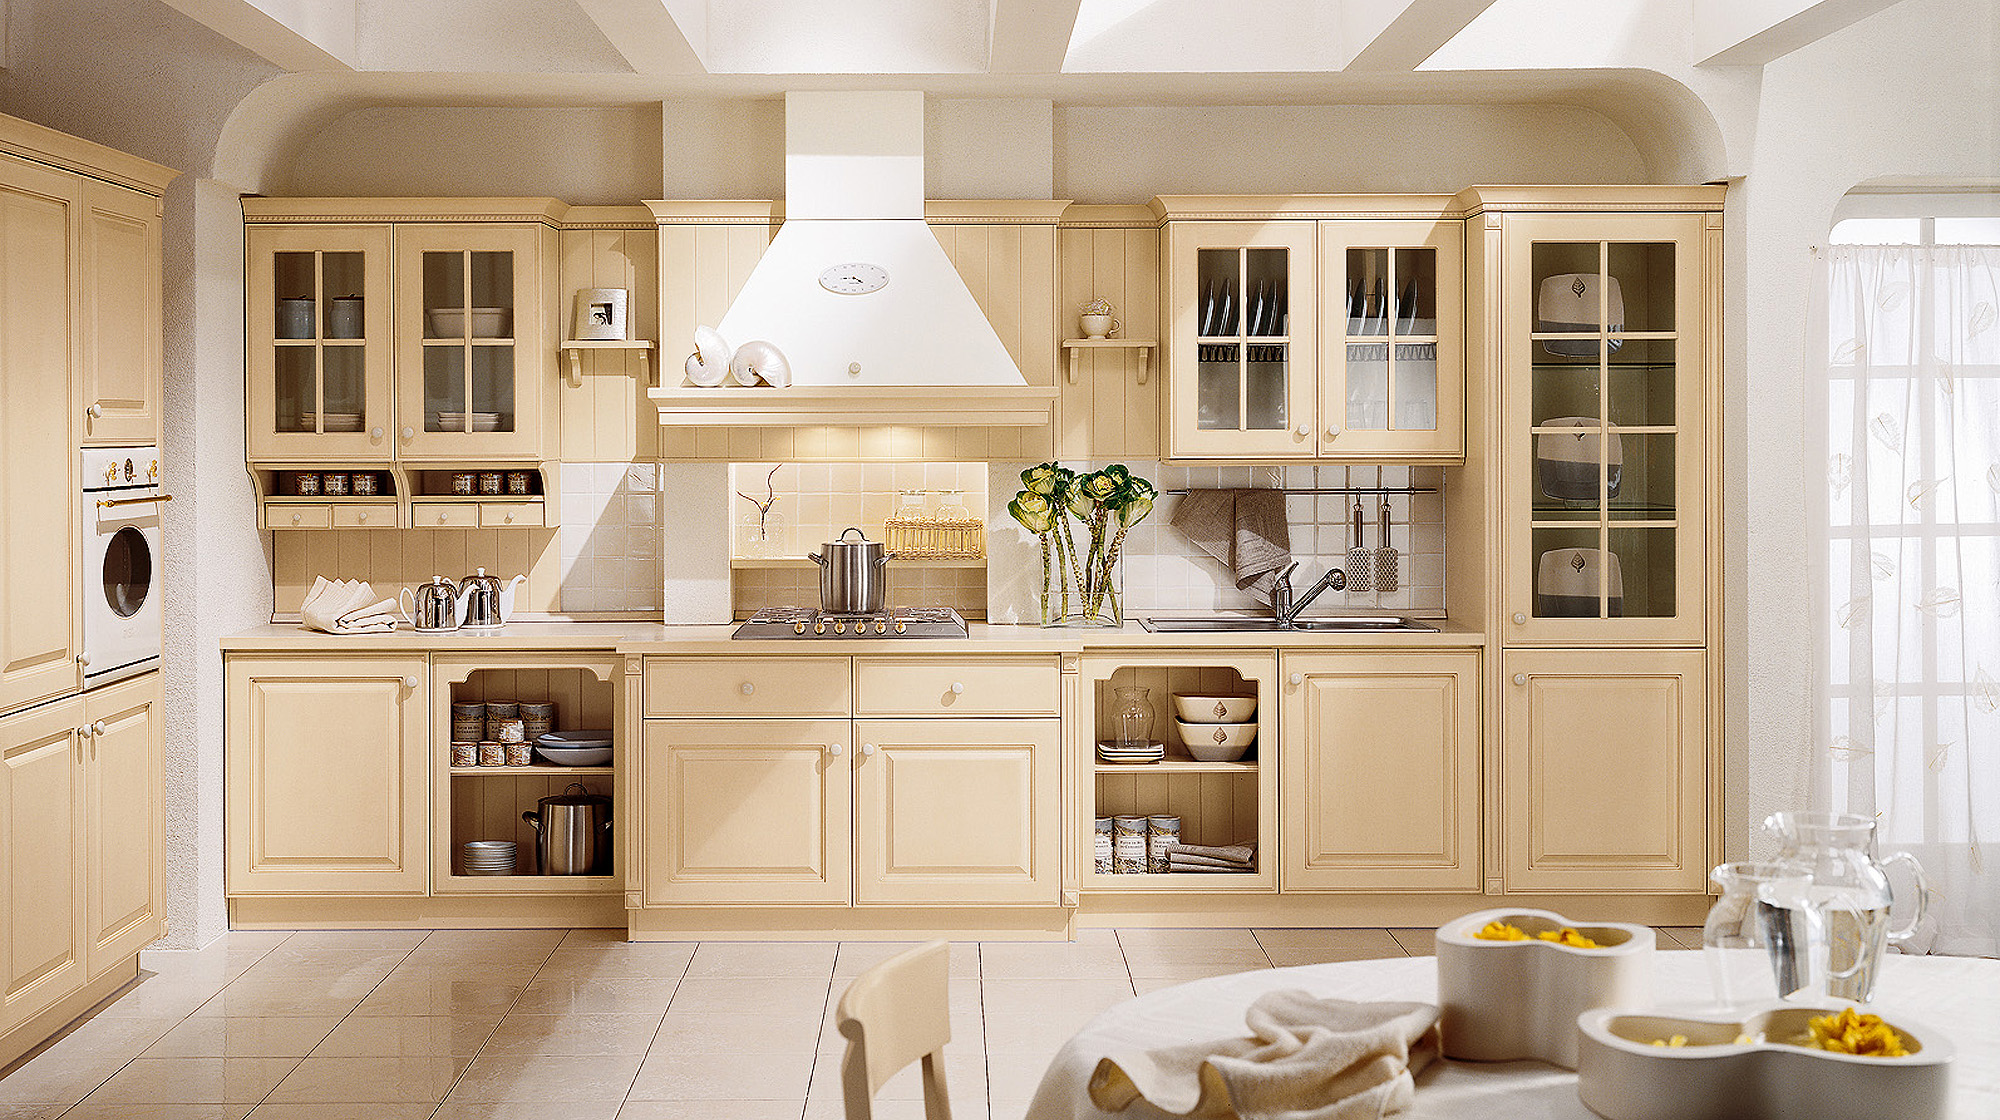 bright interior of beige kitchen in shabby chic style